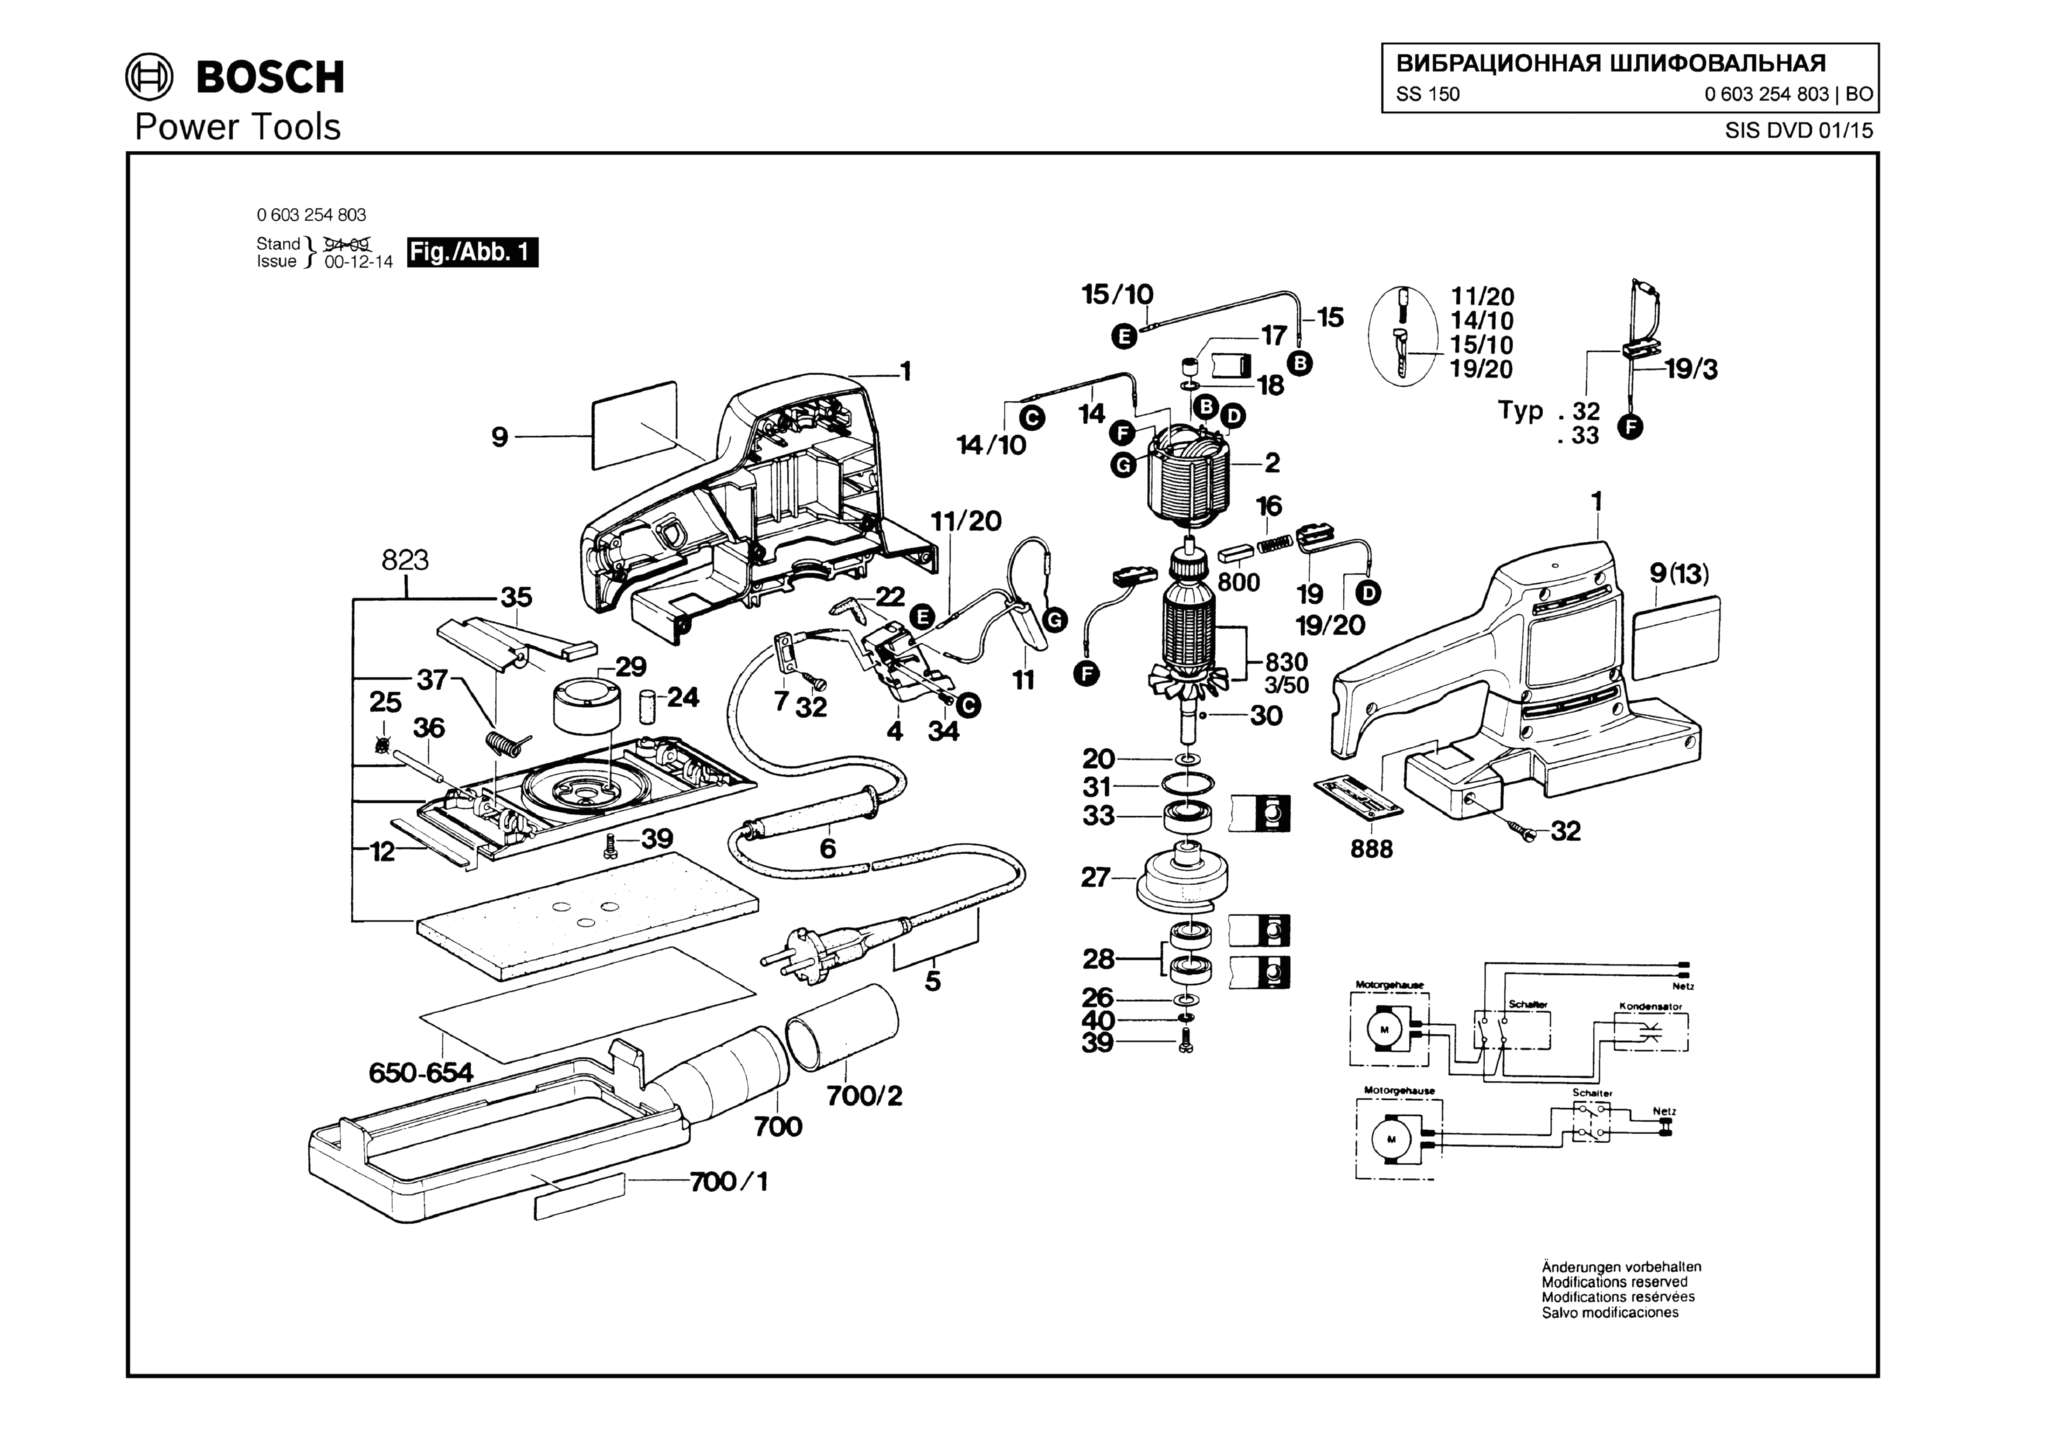 Запчасти, схема и деталировка Bosch SS 150 (ТИП 0603254803)